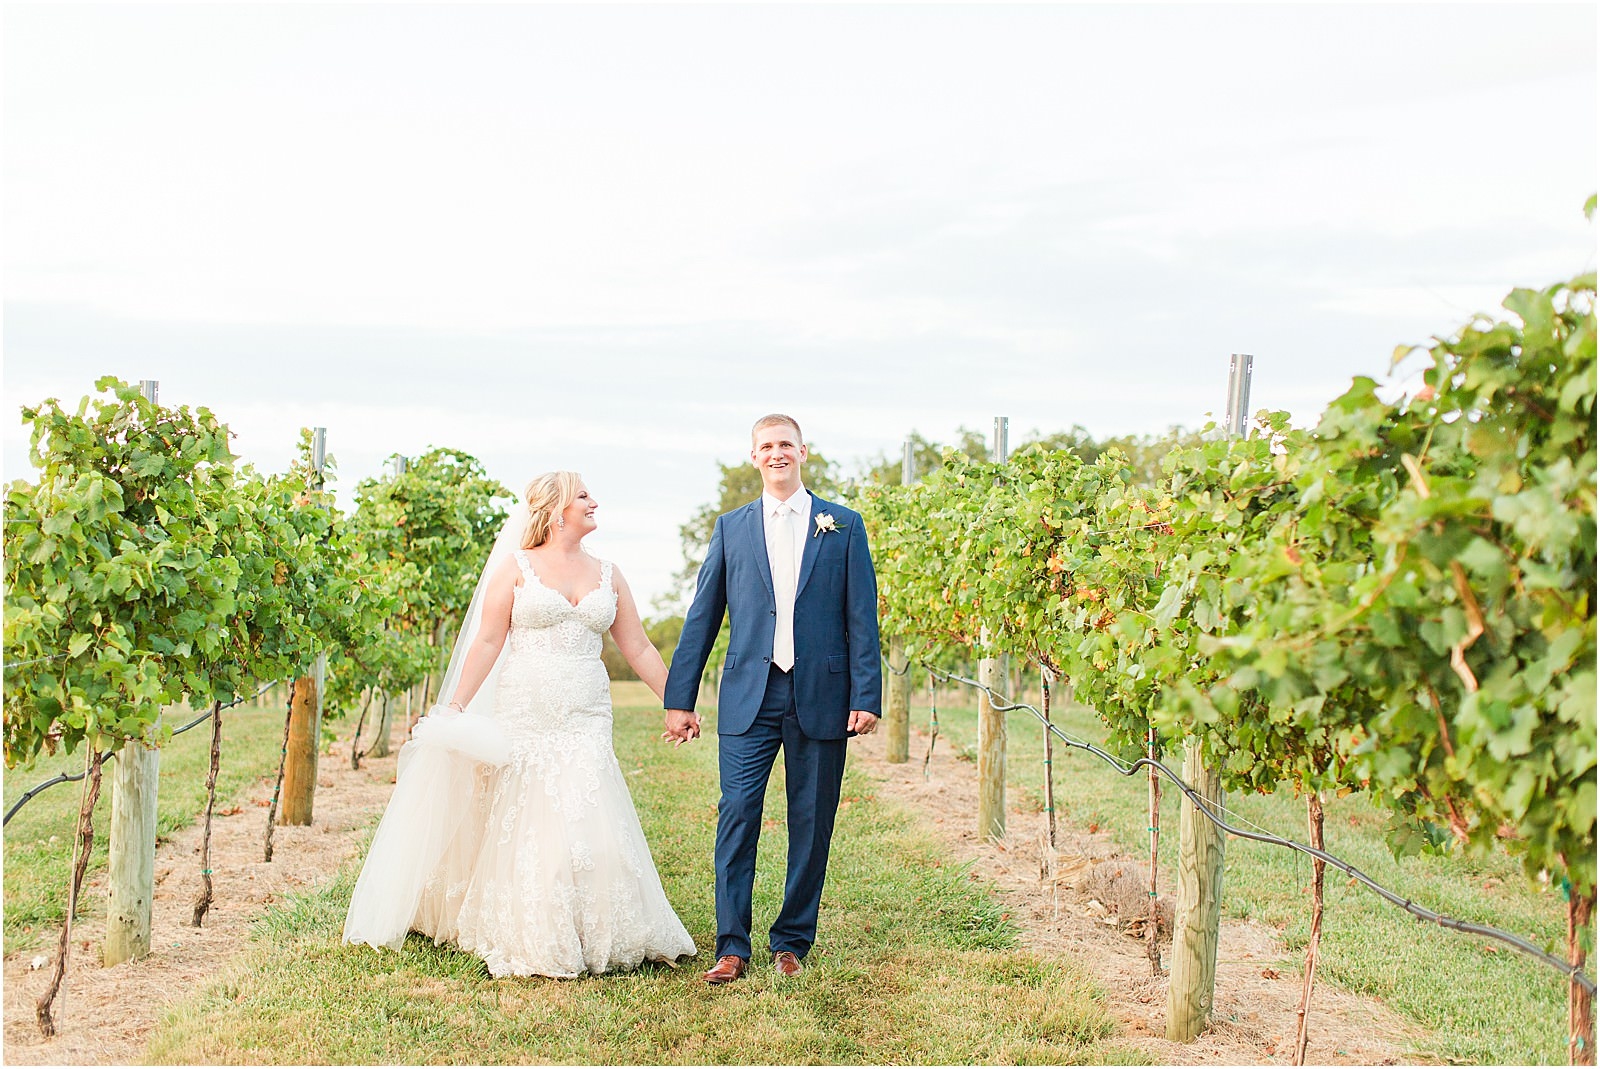 Kelsey and Caleb | Walkers Bluff Winery Wedding | Bret and Brandie Photography100.jpg